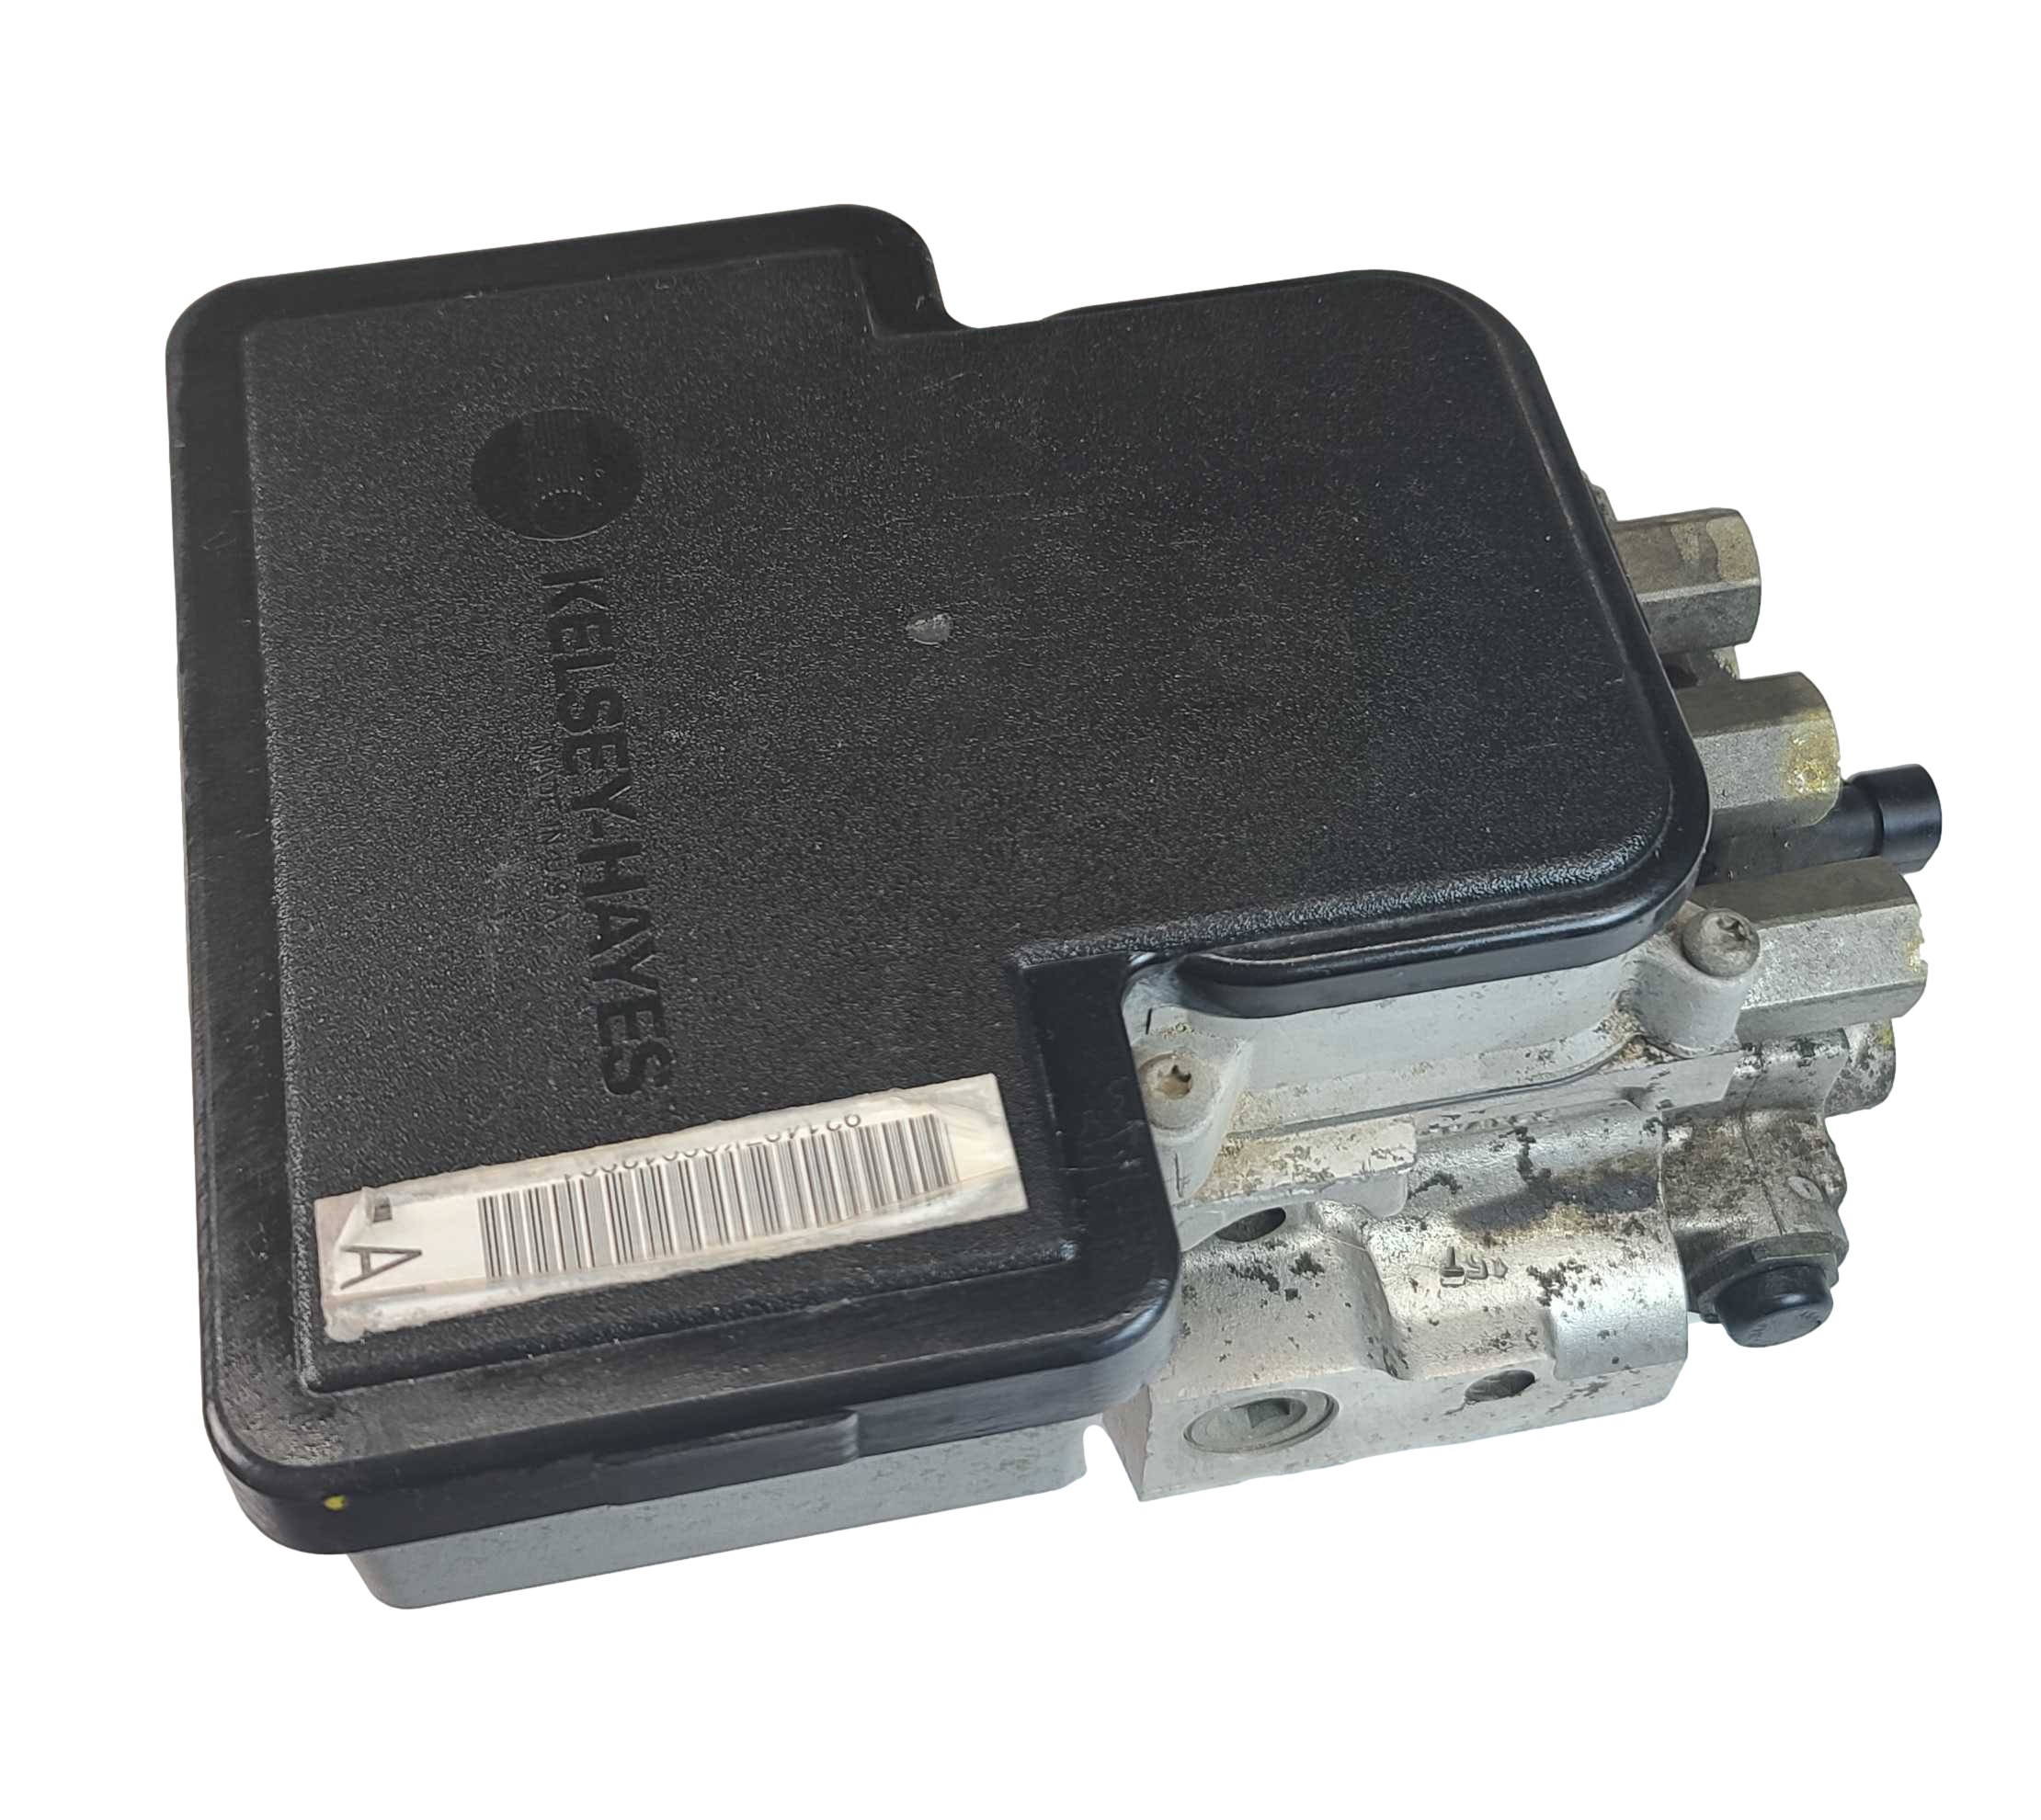 Chevrolet 2500 (1996-1999) ABS EBCM Anti-Lock Brake Control Module Repair Service